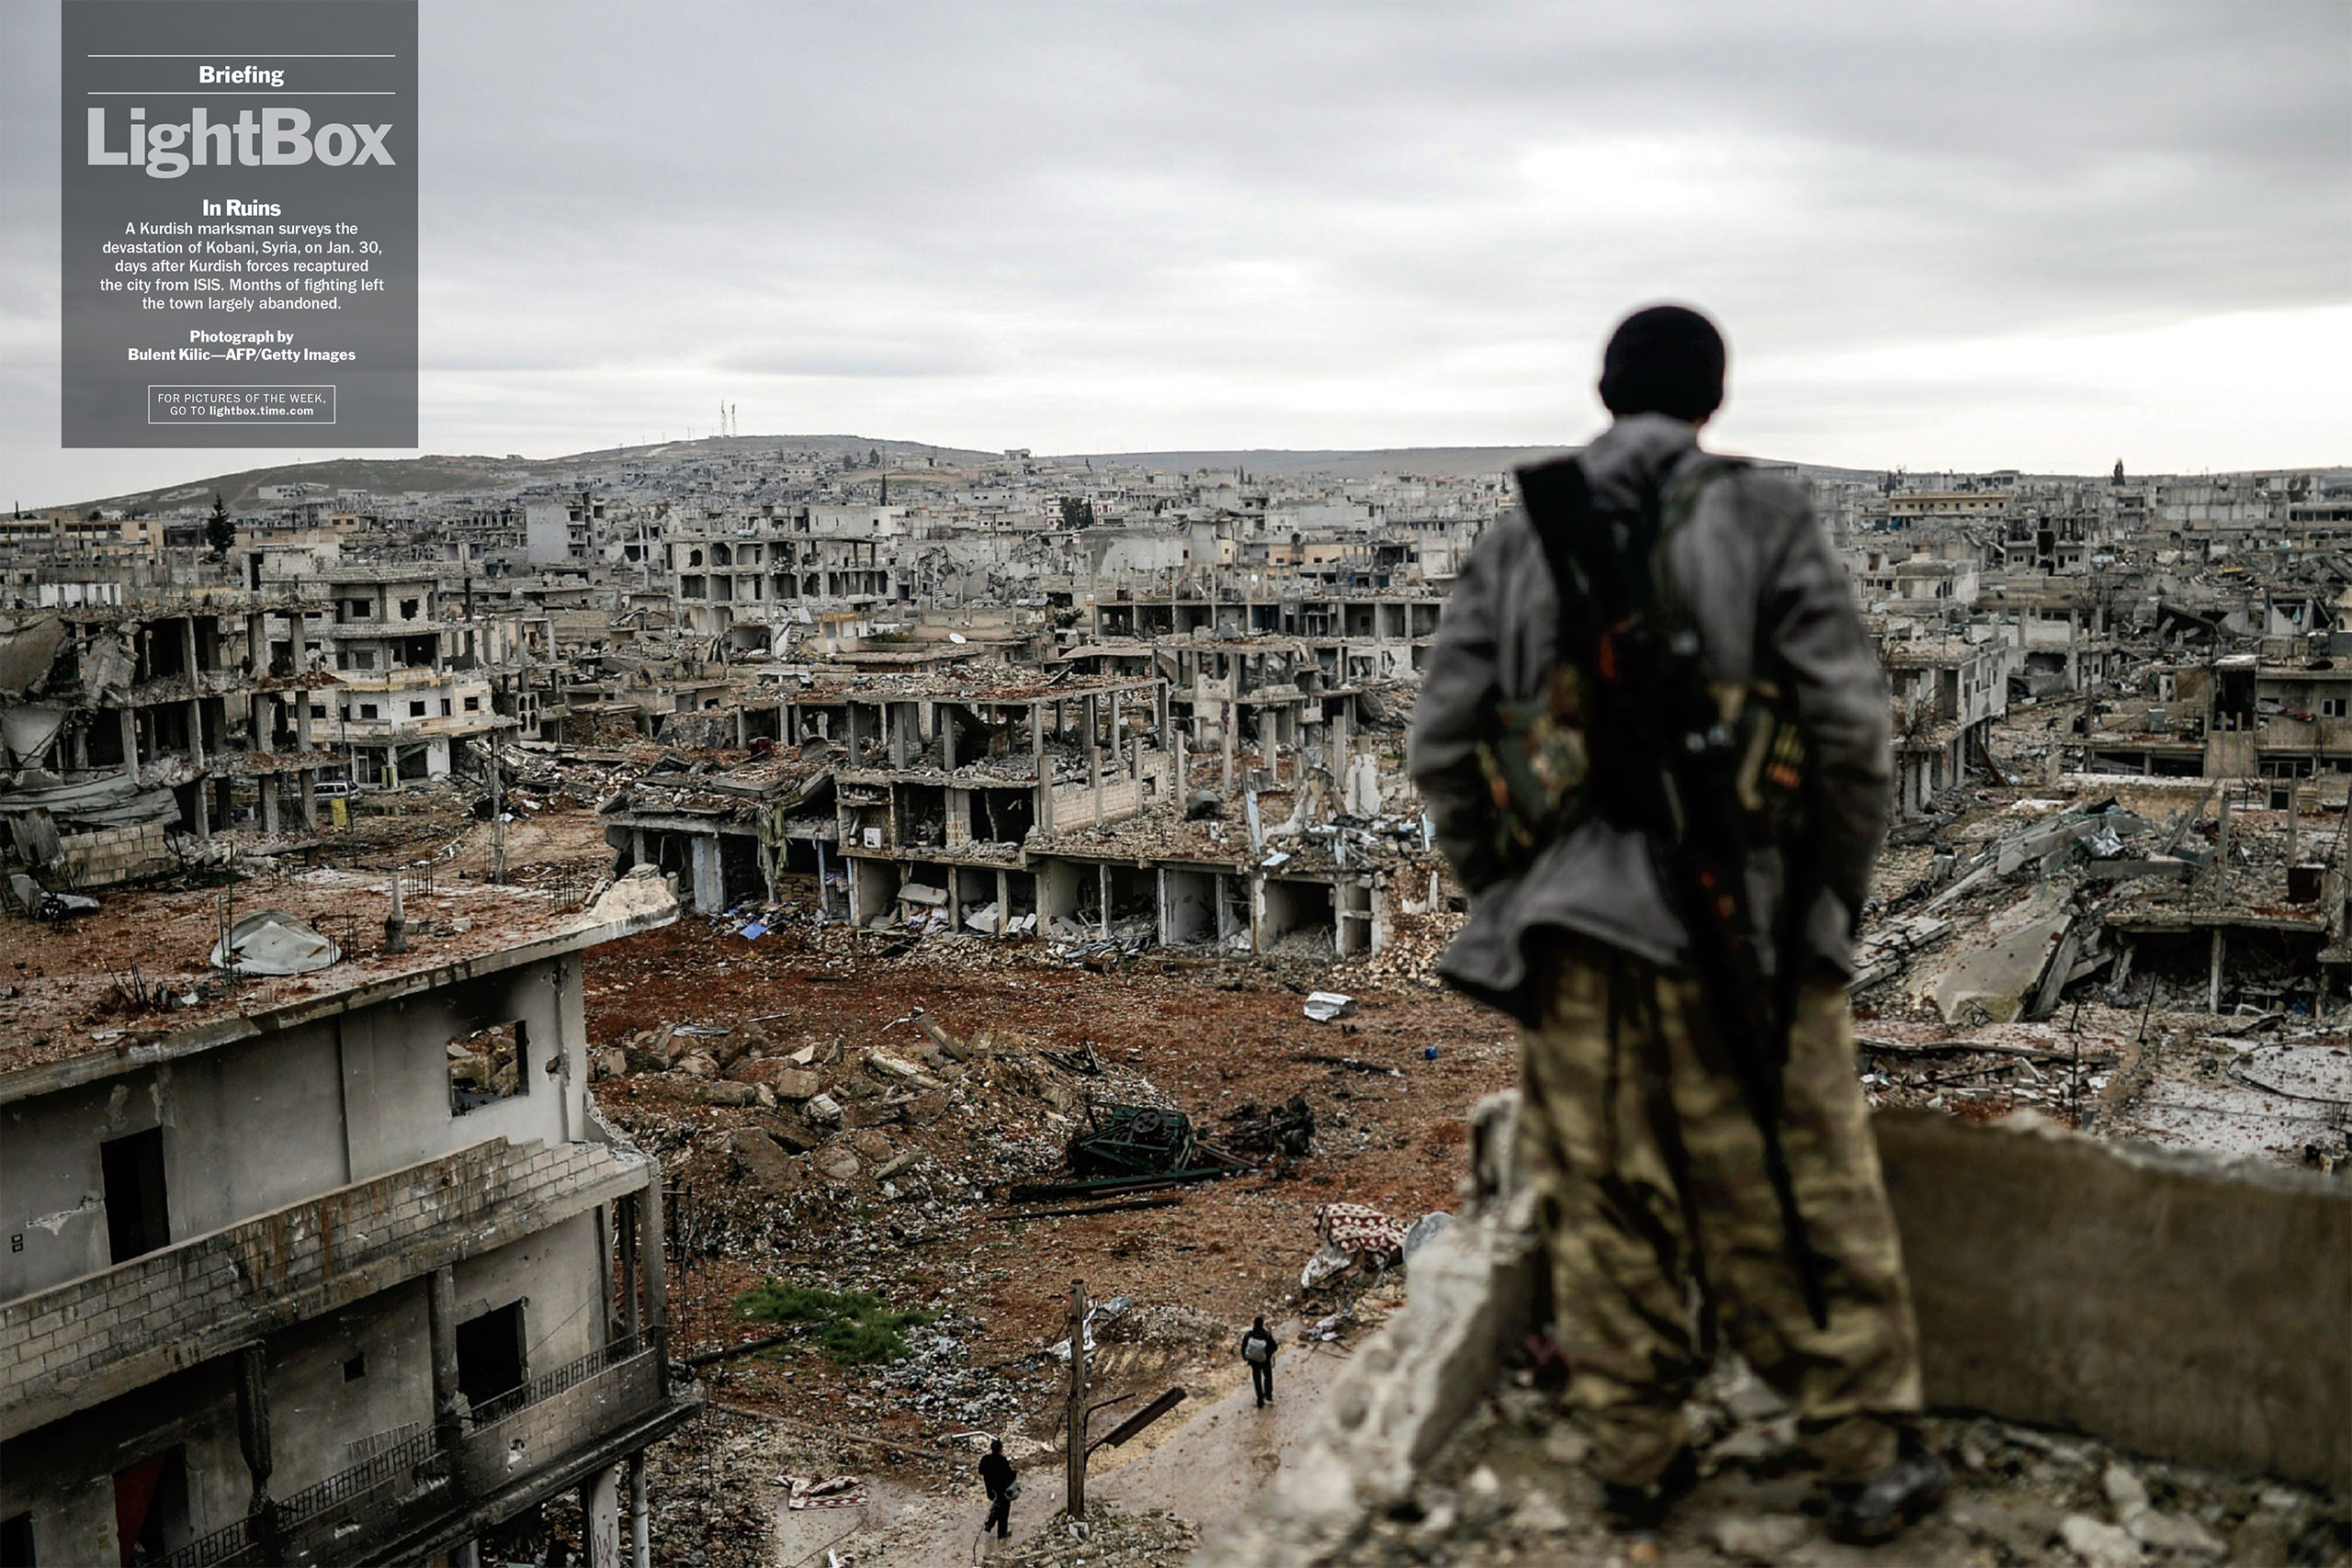 Photograph by Bulent Kilic—AFP/Getty ImagesA Kurdish marksman surveys the devastation of Kobani, Syria, on Jan. 30, days after Kurdish forces recaptured the city from ISIS. Months of fighting left the town largely abandoned. (TIME issue February 16, 2015)